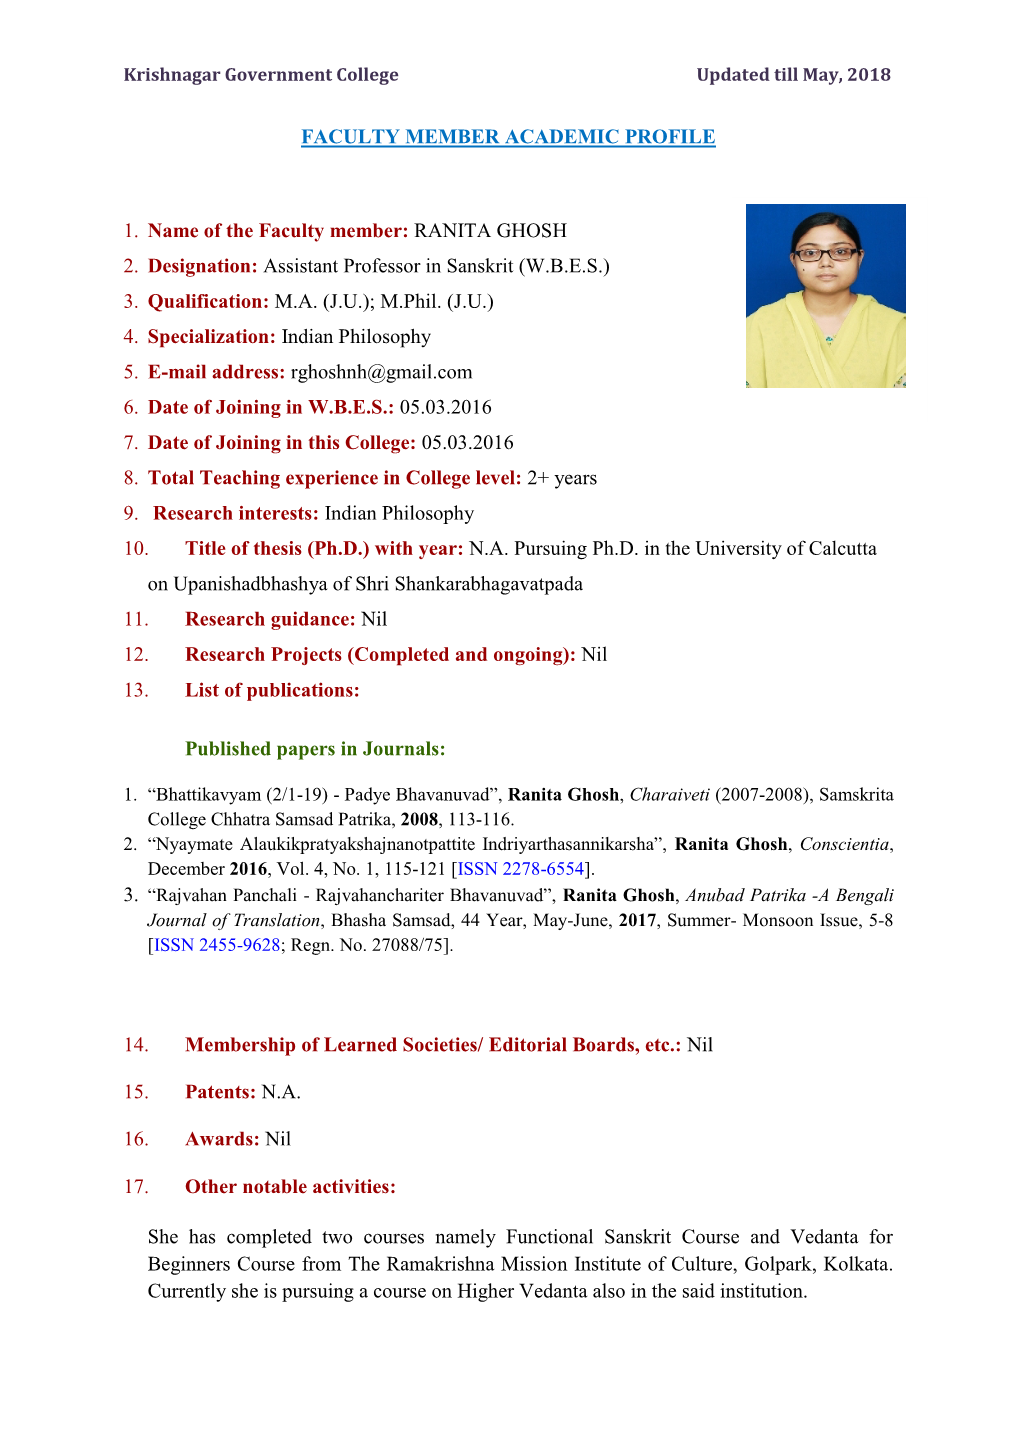 RANITA GHOSH 2. Designation: Assistant Professor in Sanskrit (W.B.E.S.) 3